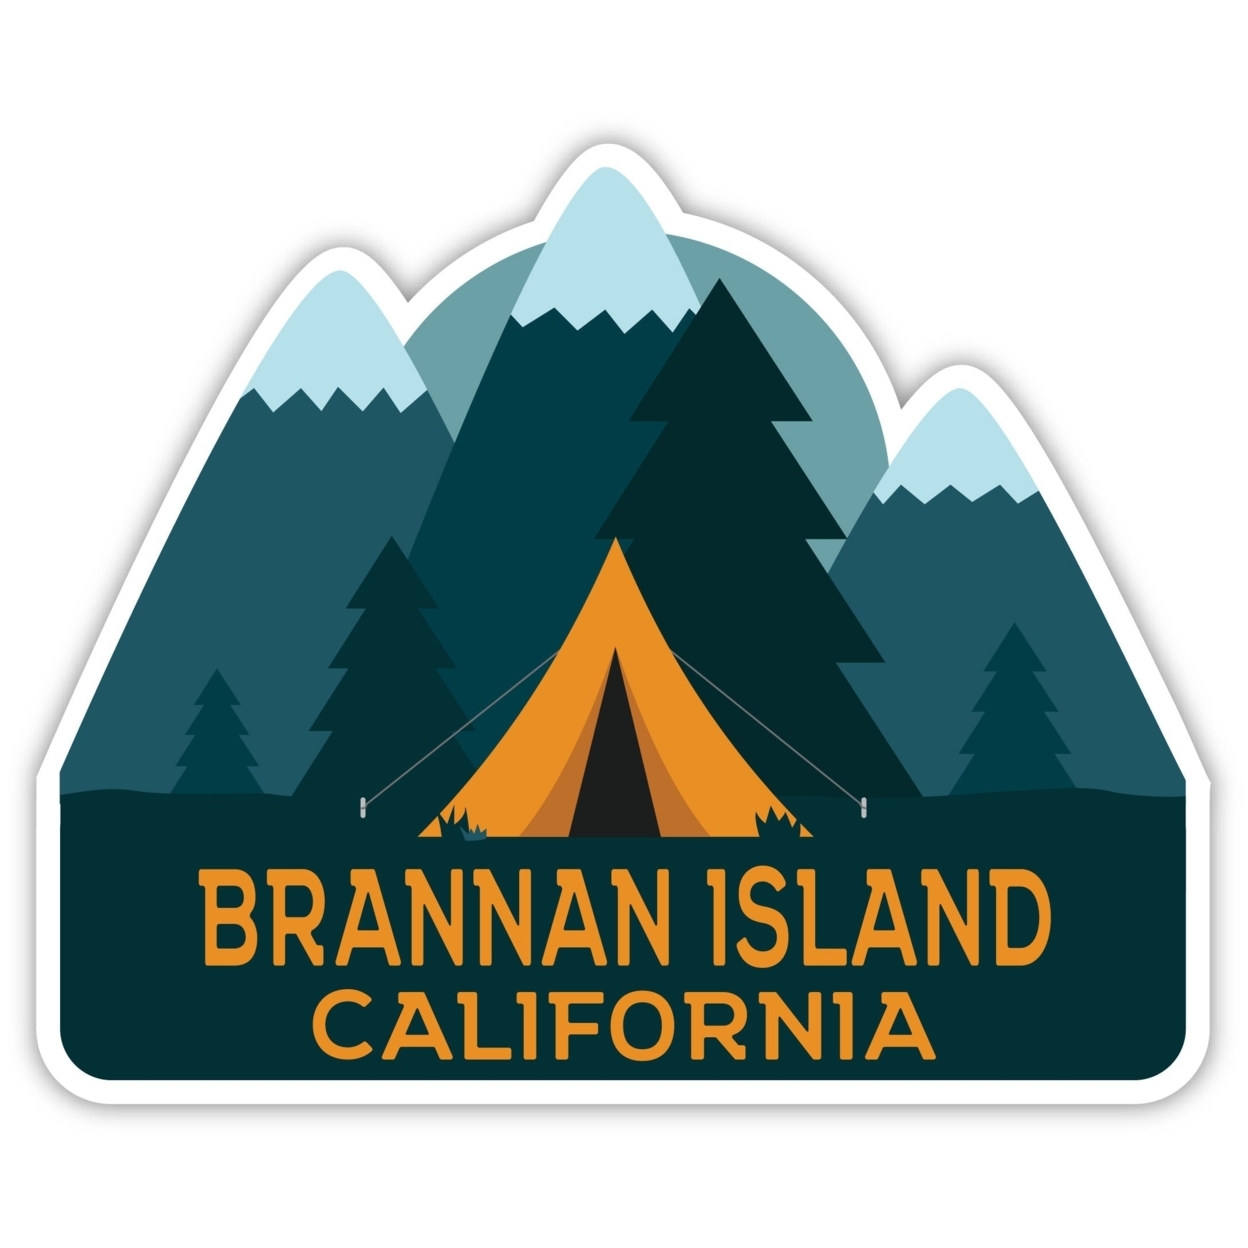 Brannan Island California Souvenir Decorative Stickers (Choose Theme And Size) - 4-Pack, 2-Inch, Adventures Awaits